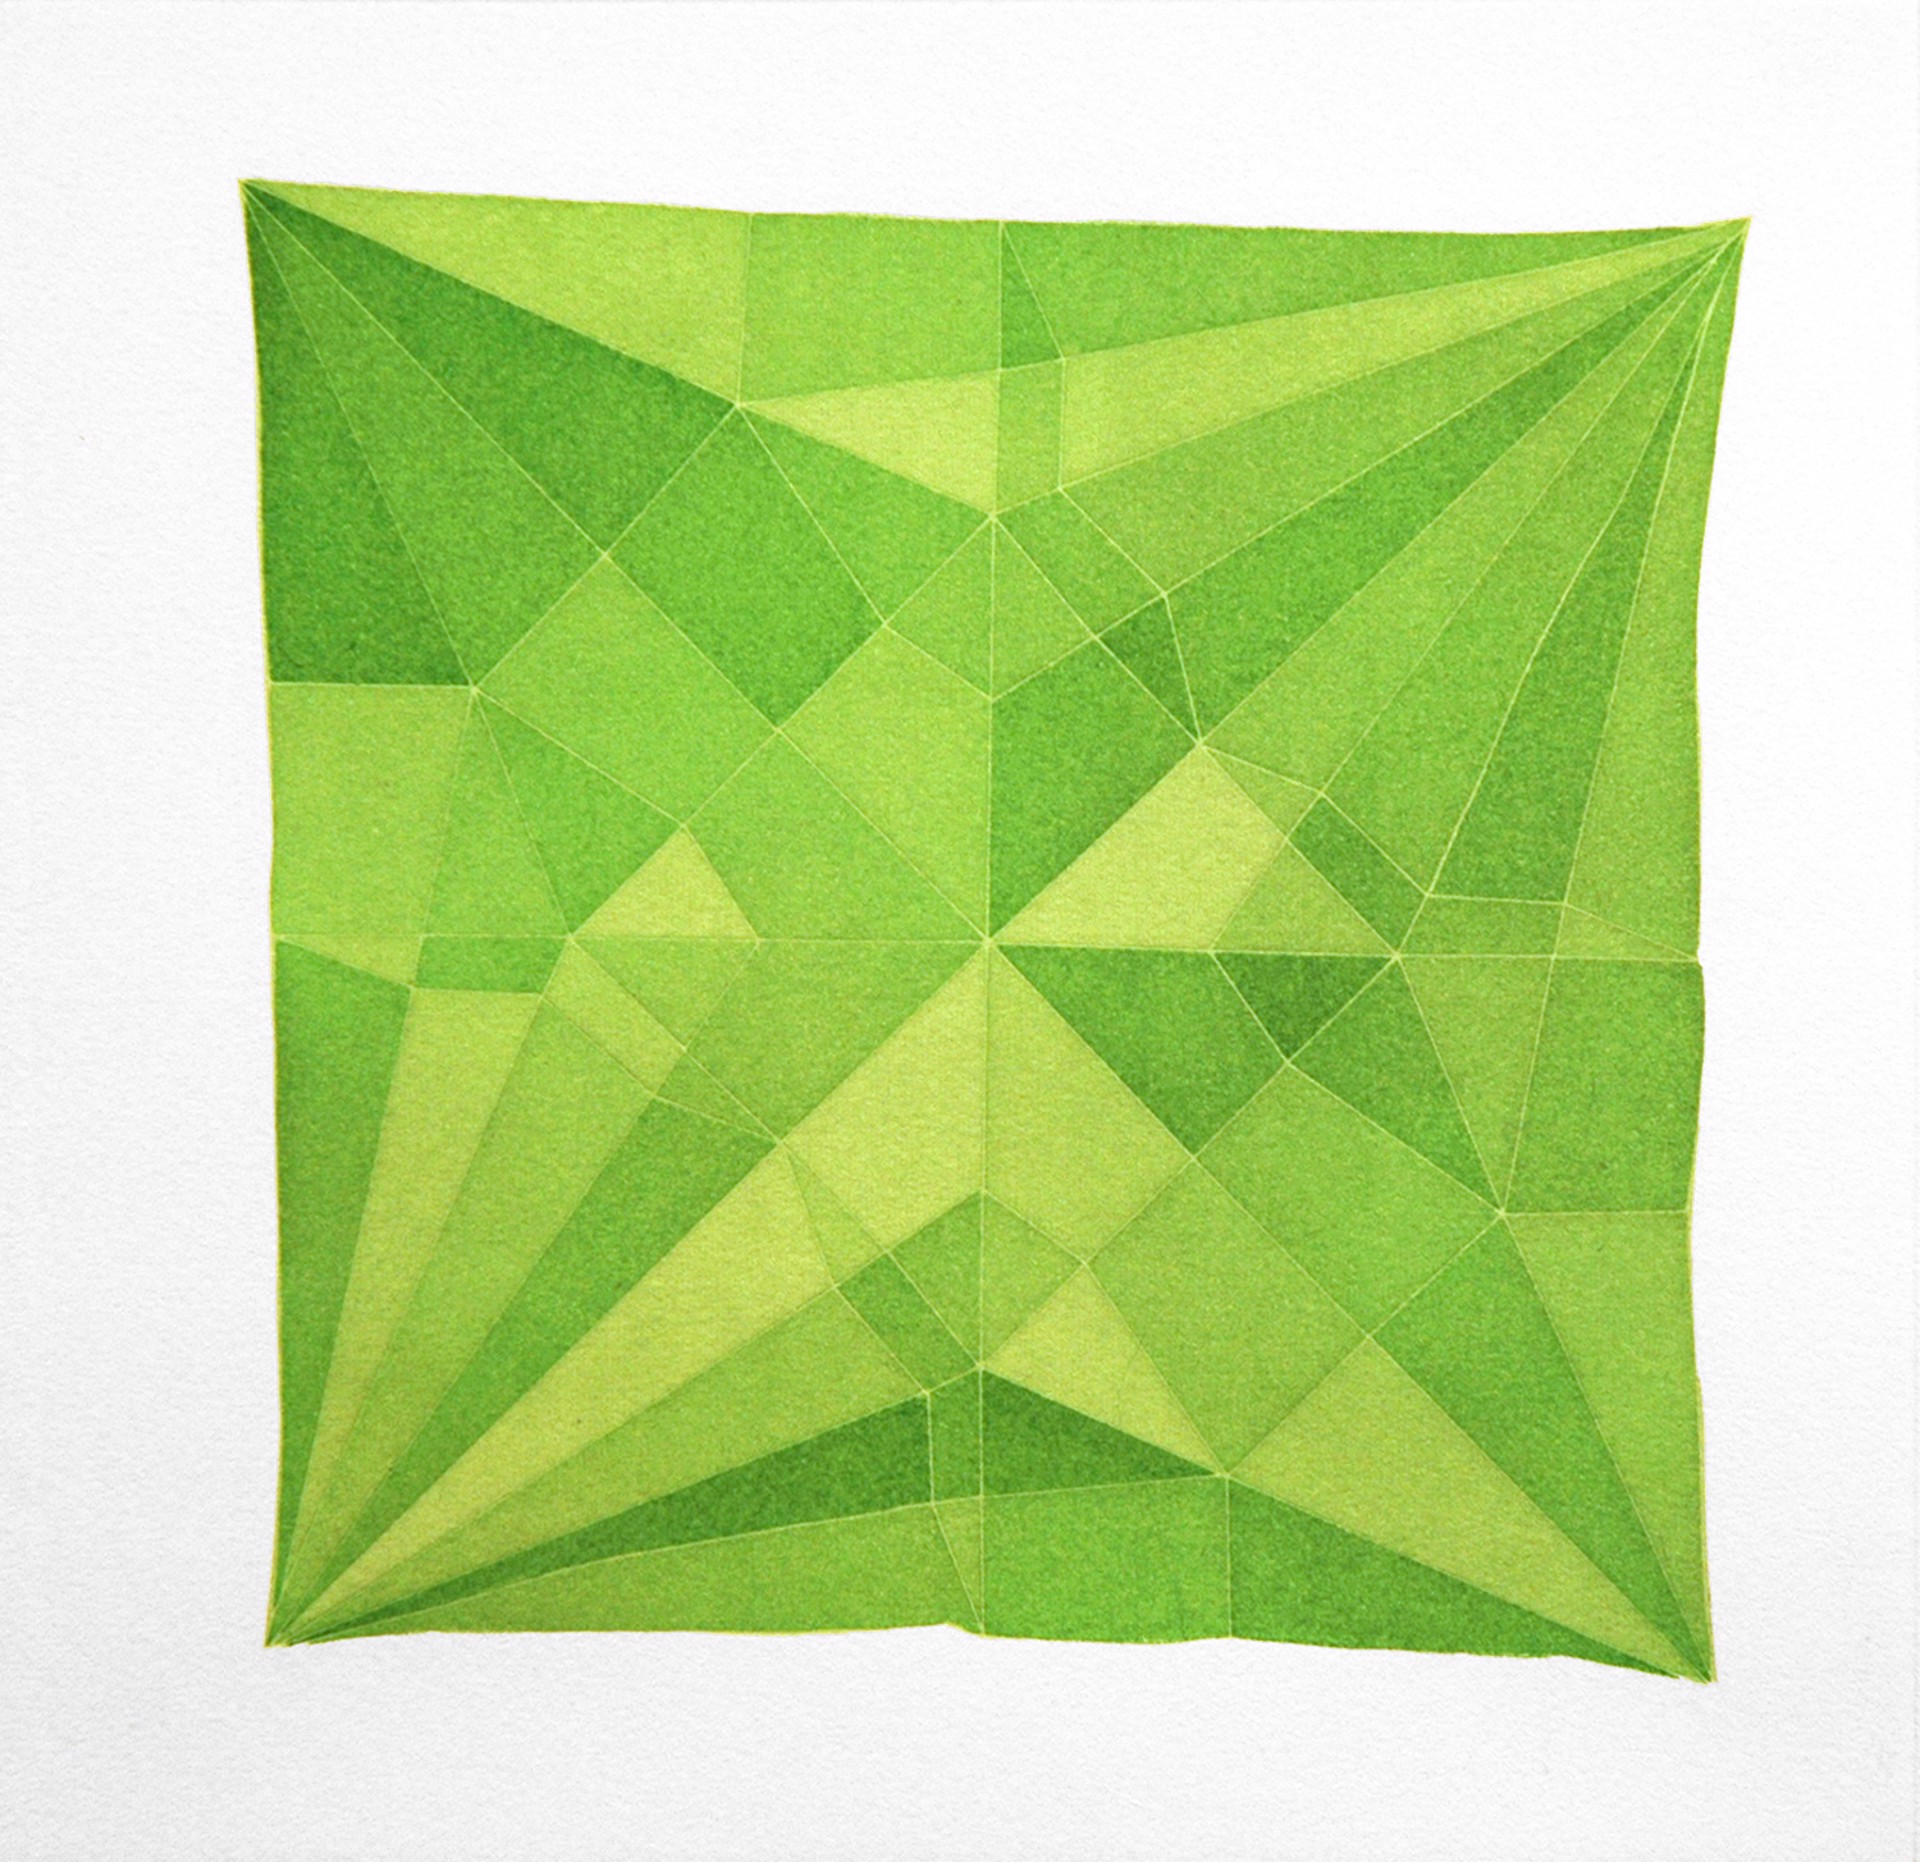 Origami Crane Green by Suzanne Frazier